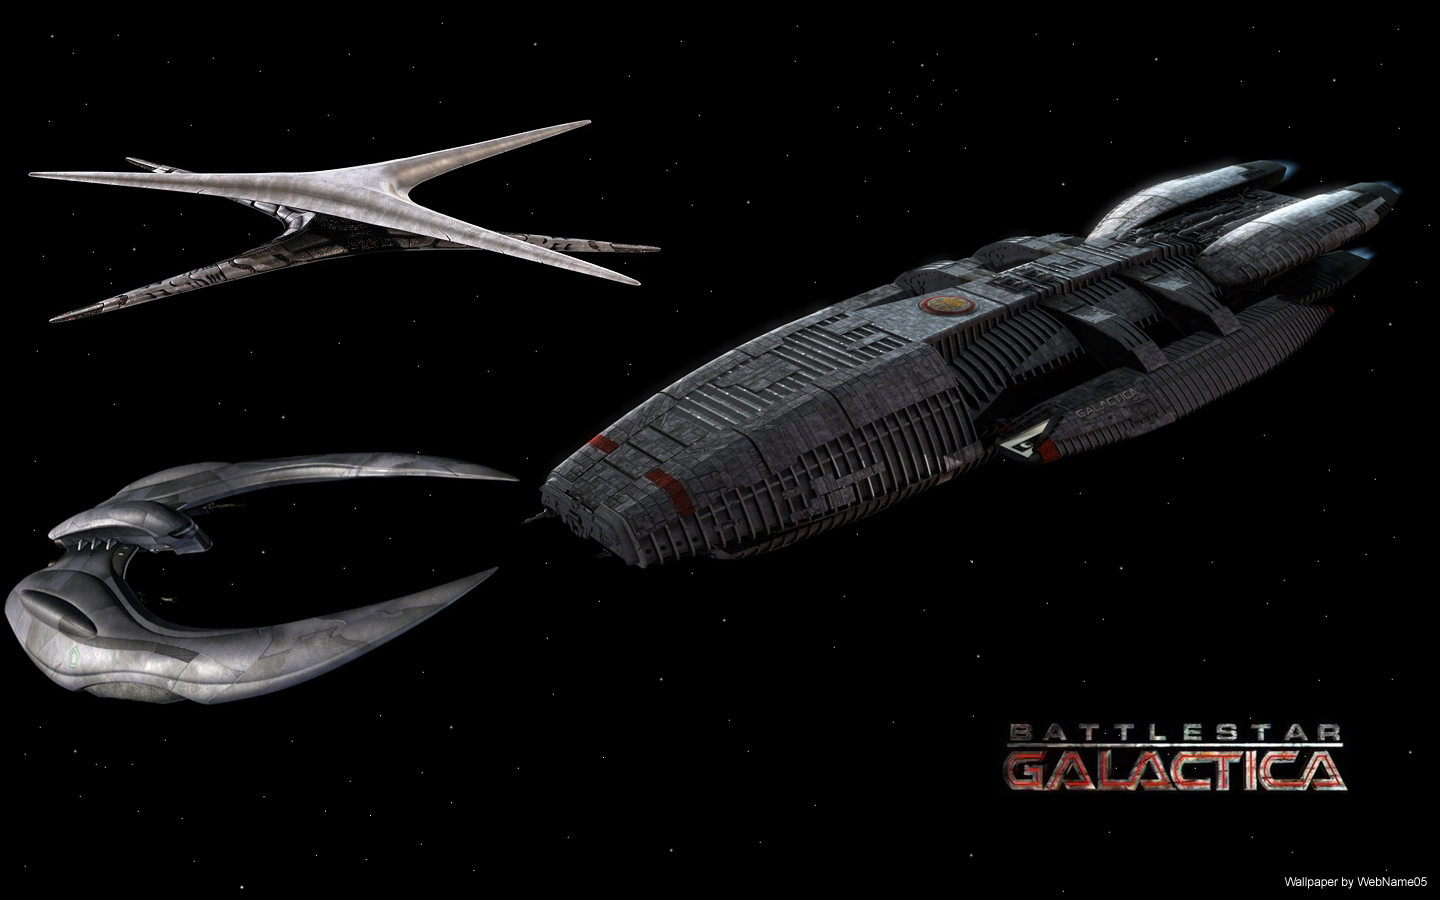 Battlestar Galactica Wallpaper by webname05 on DeviantArt